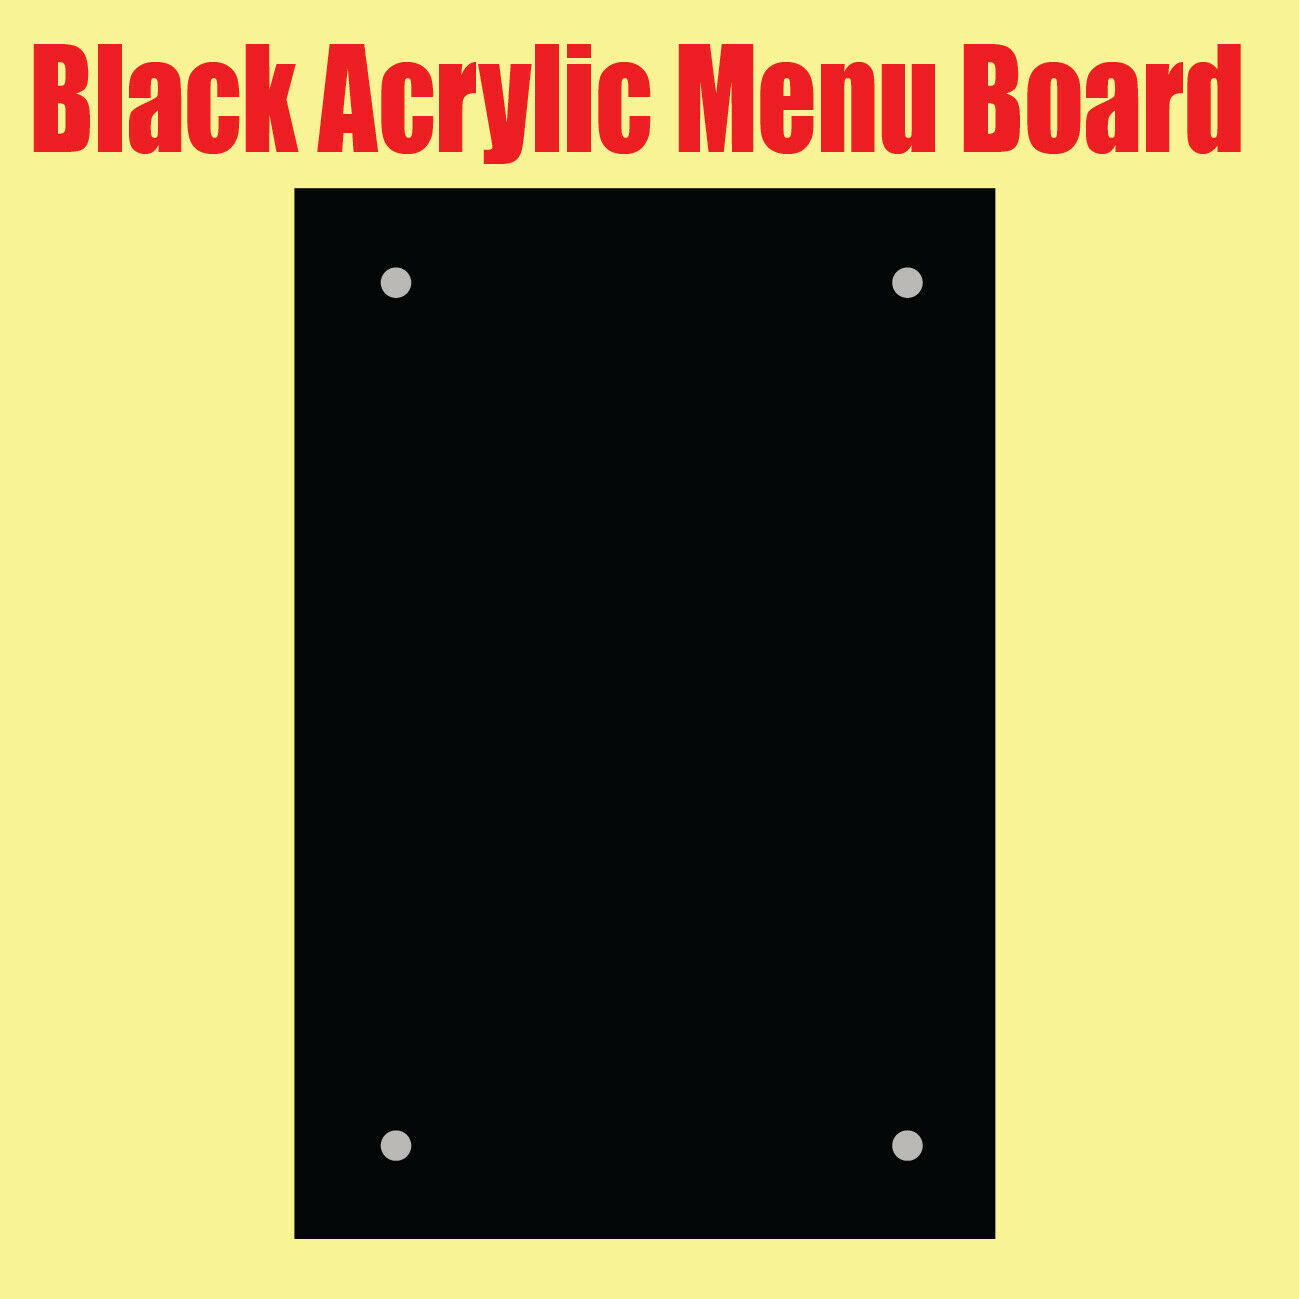 https://bigbanner.com.au/wp-content/uploads/2021/10/Black-Acrylic-Menu-Board-1.jpg